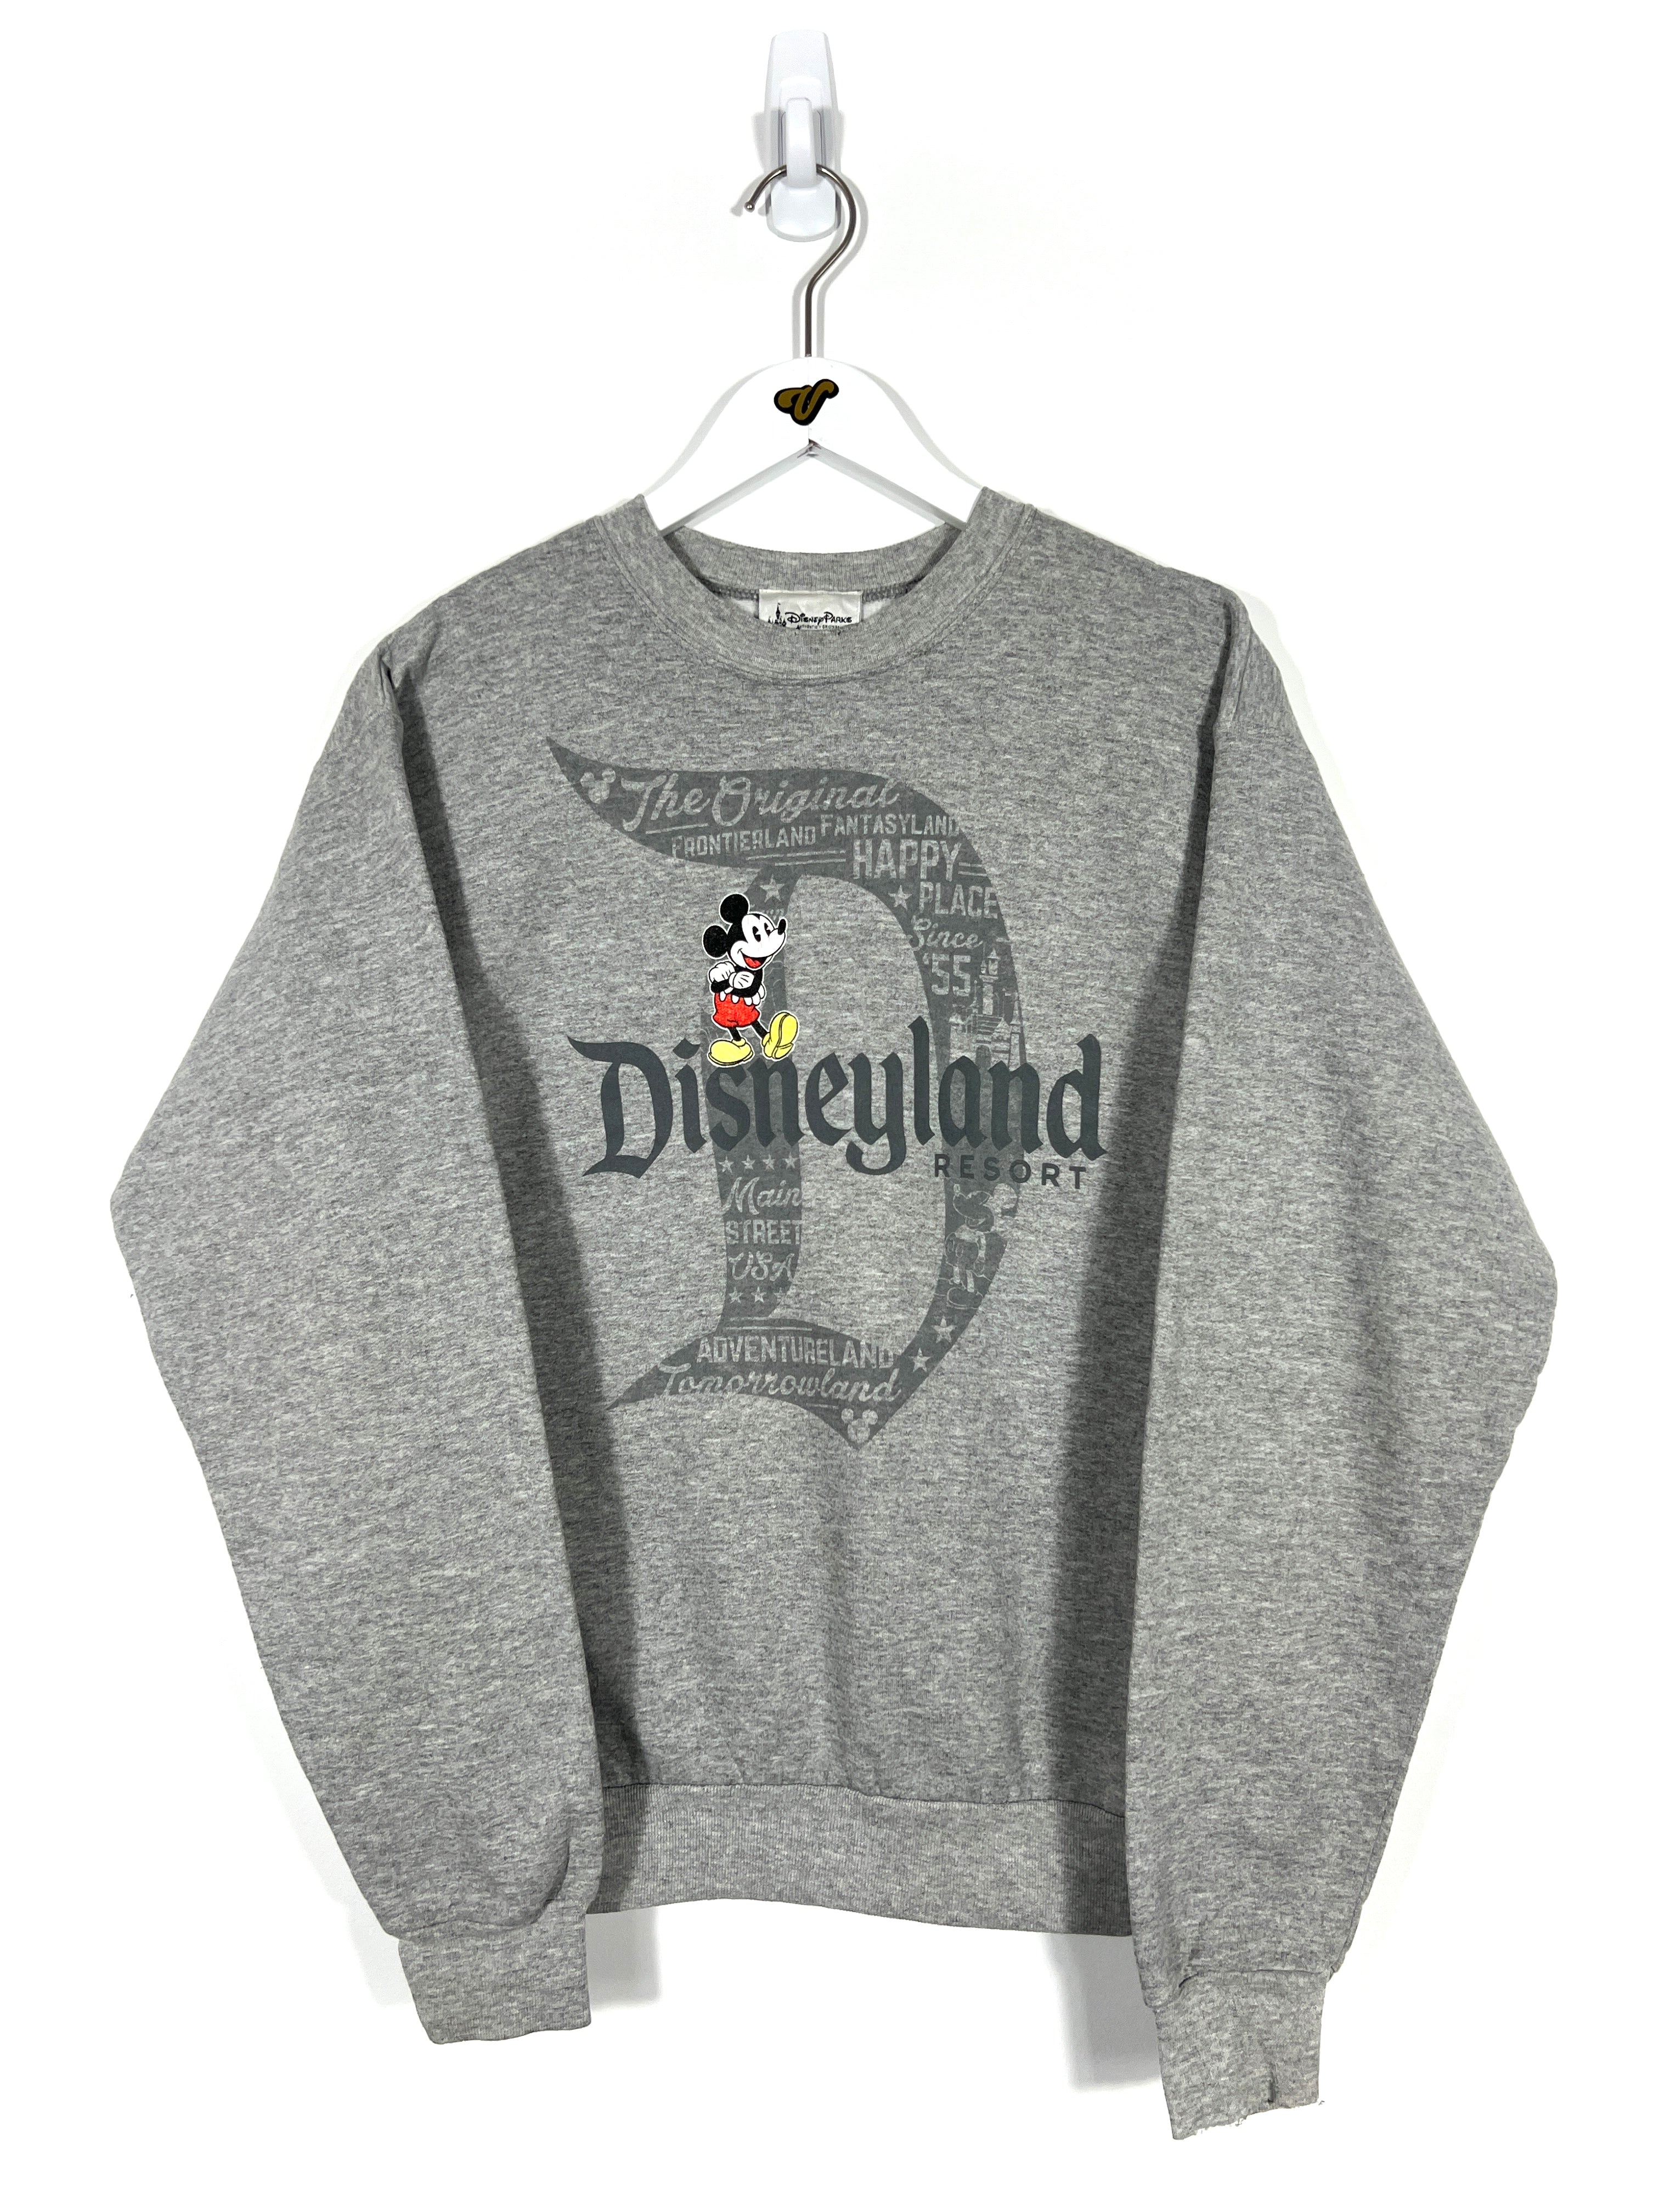 Vintage Disneyland Crewneck Sweatshirt - Men's Small